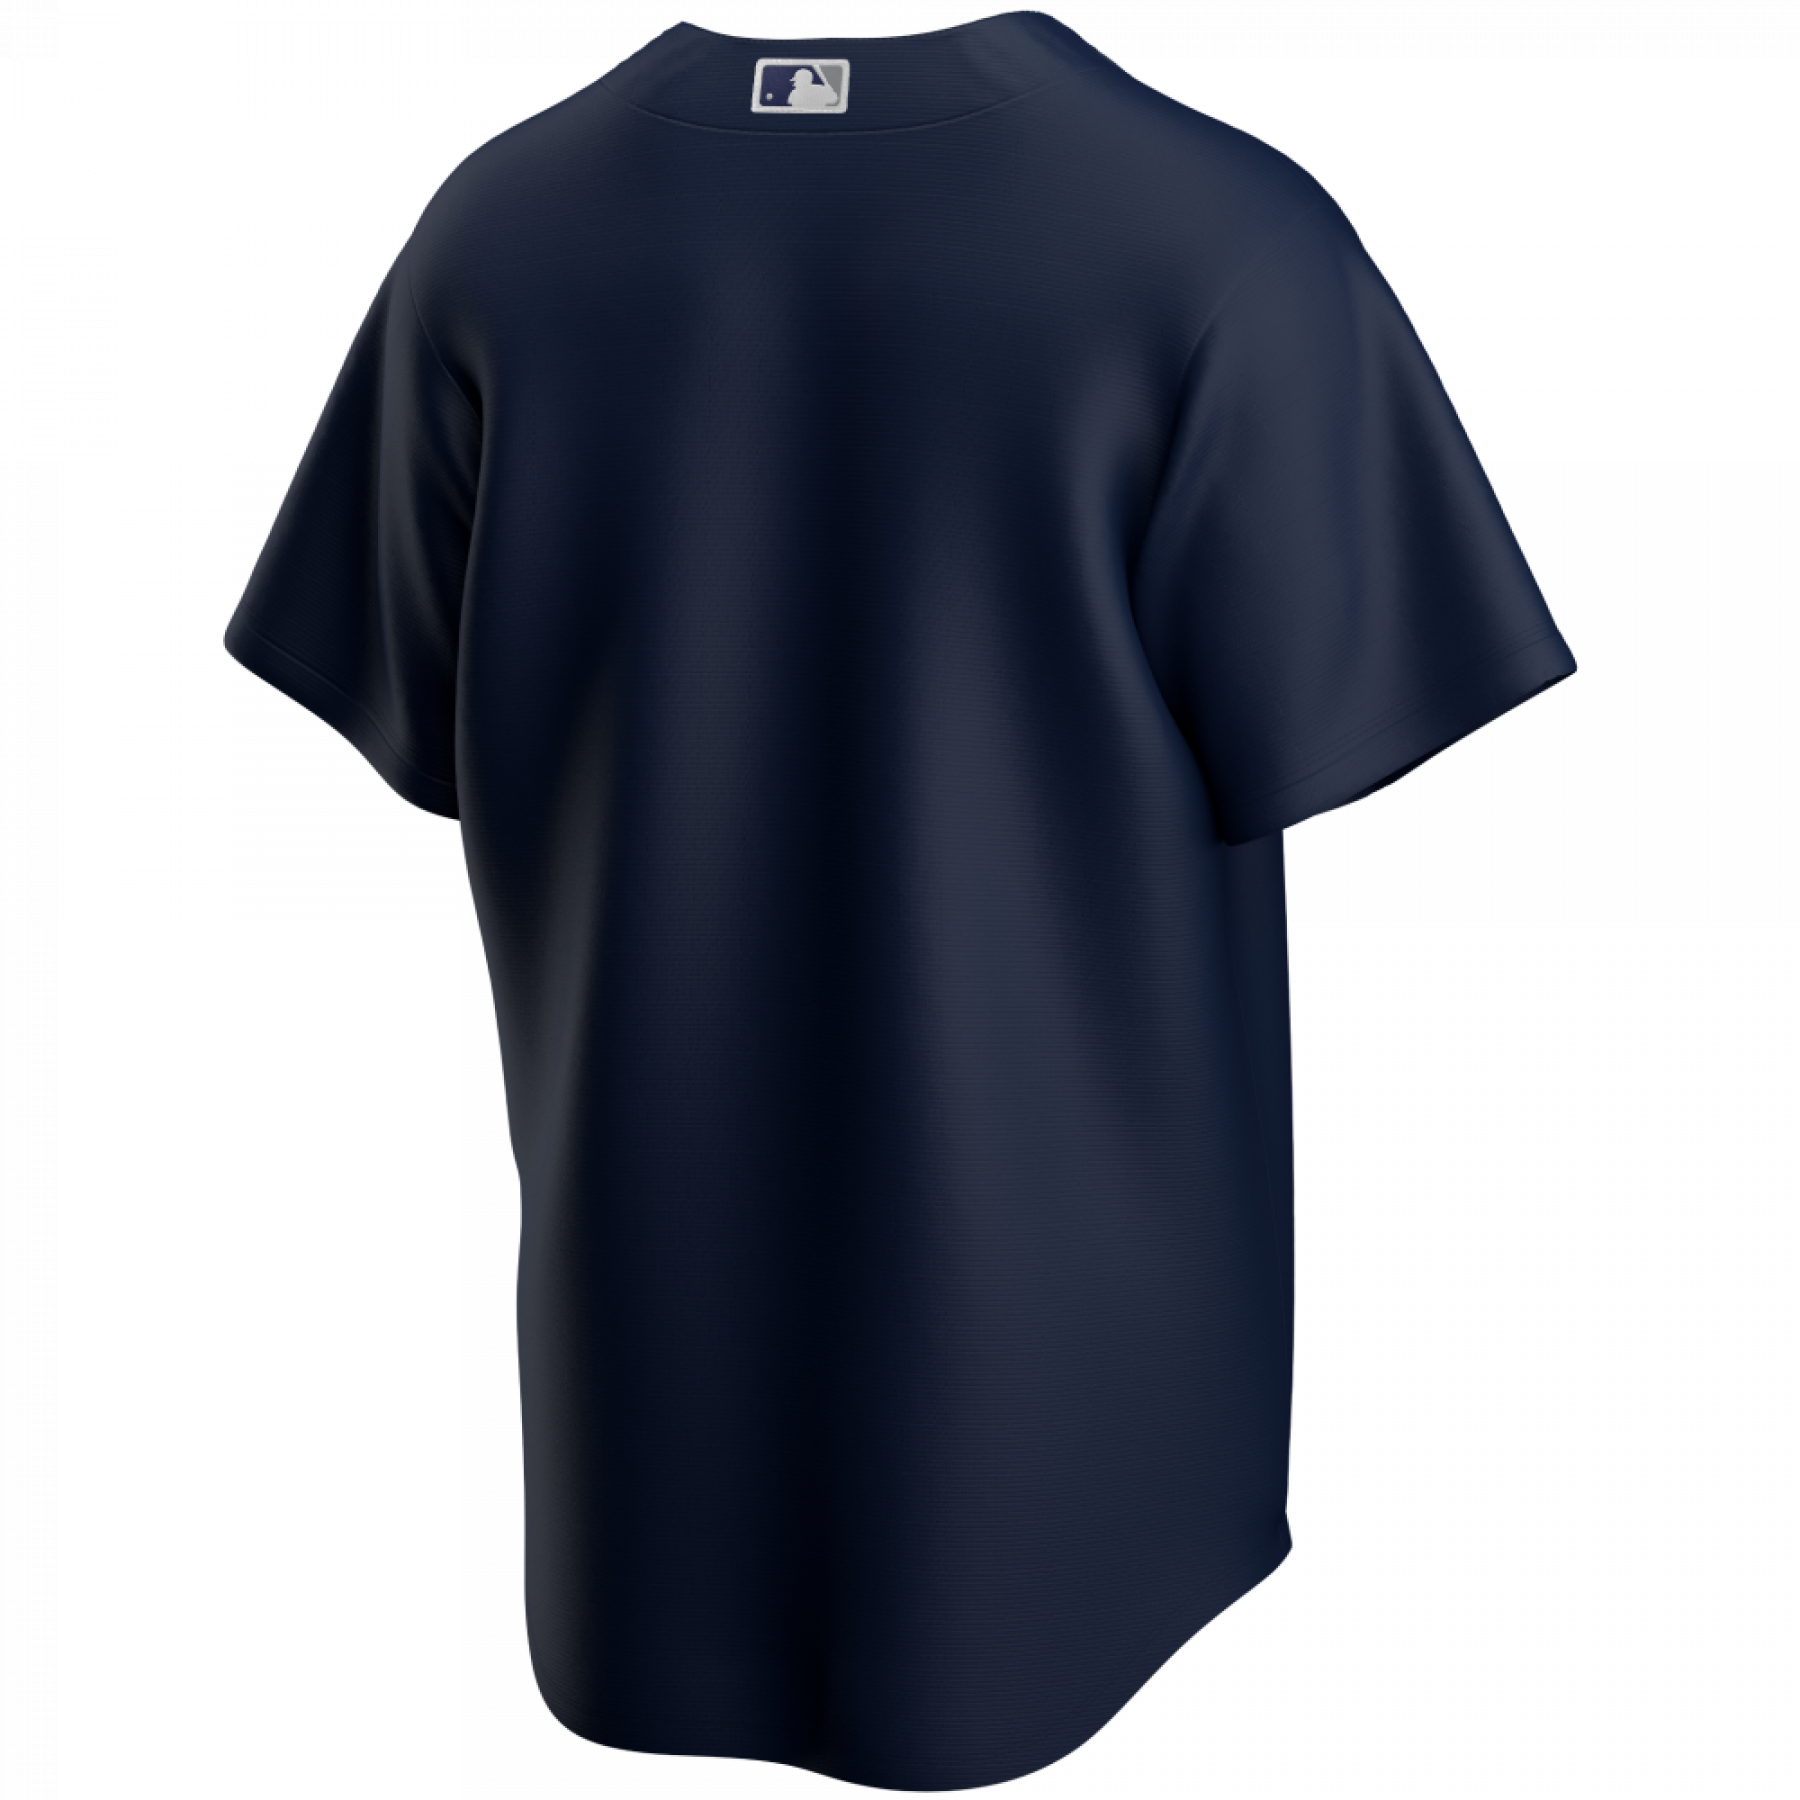 Réplica oficial de la camiseta New York Yankees segunda equipación